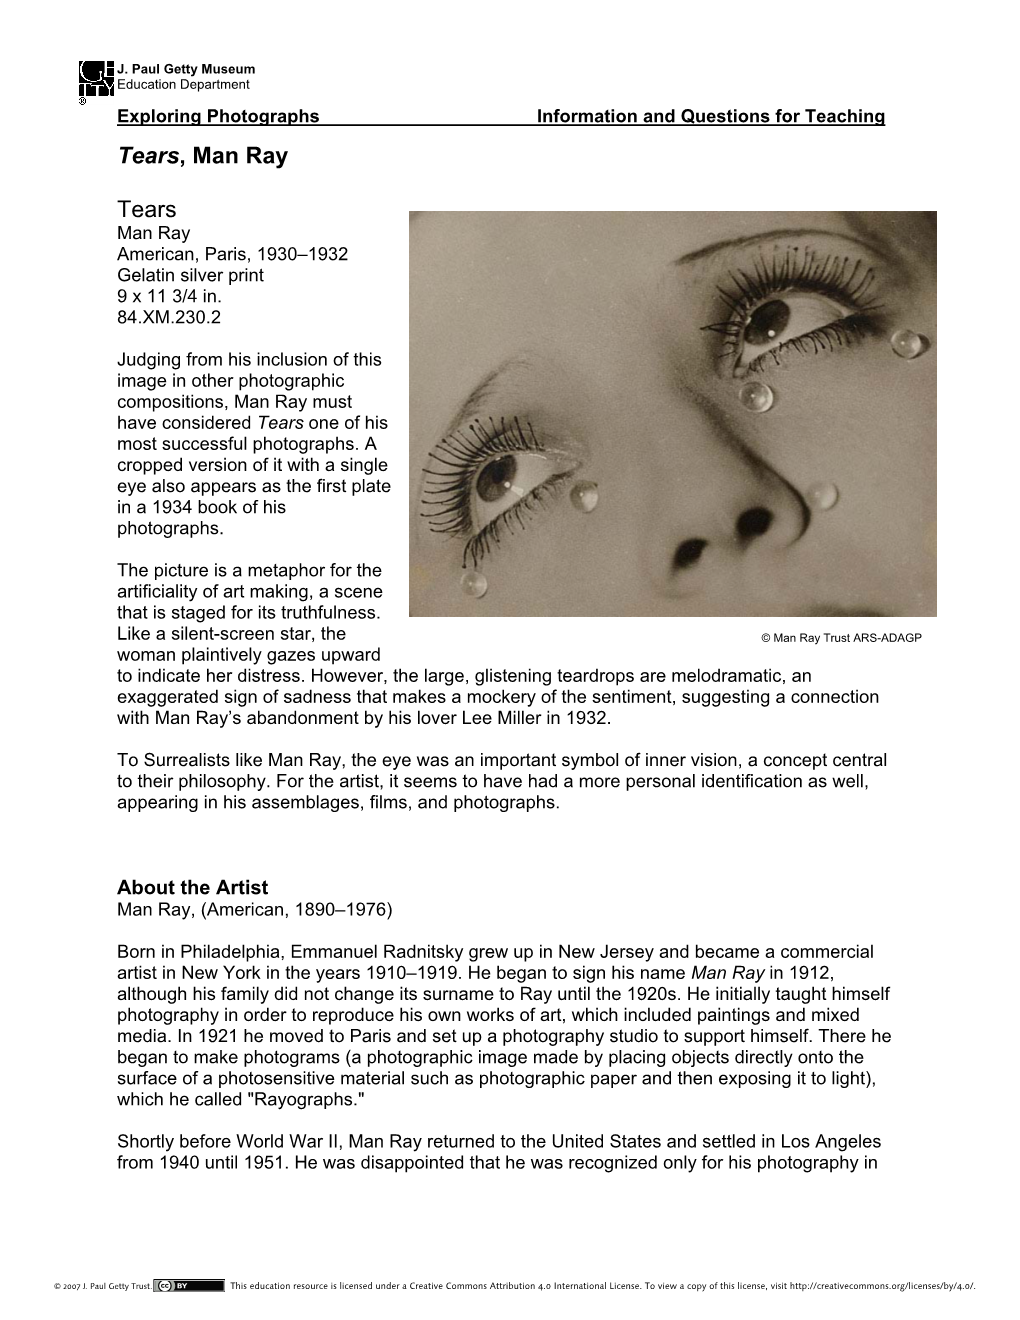 Tears, Man Ray, 1930–1932